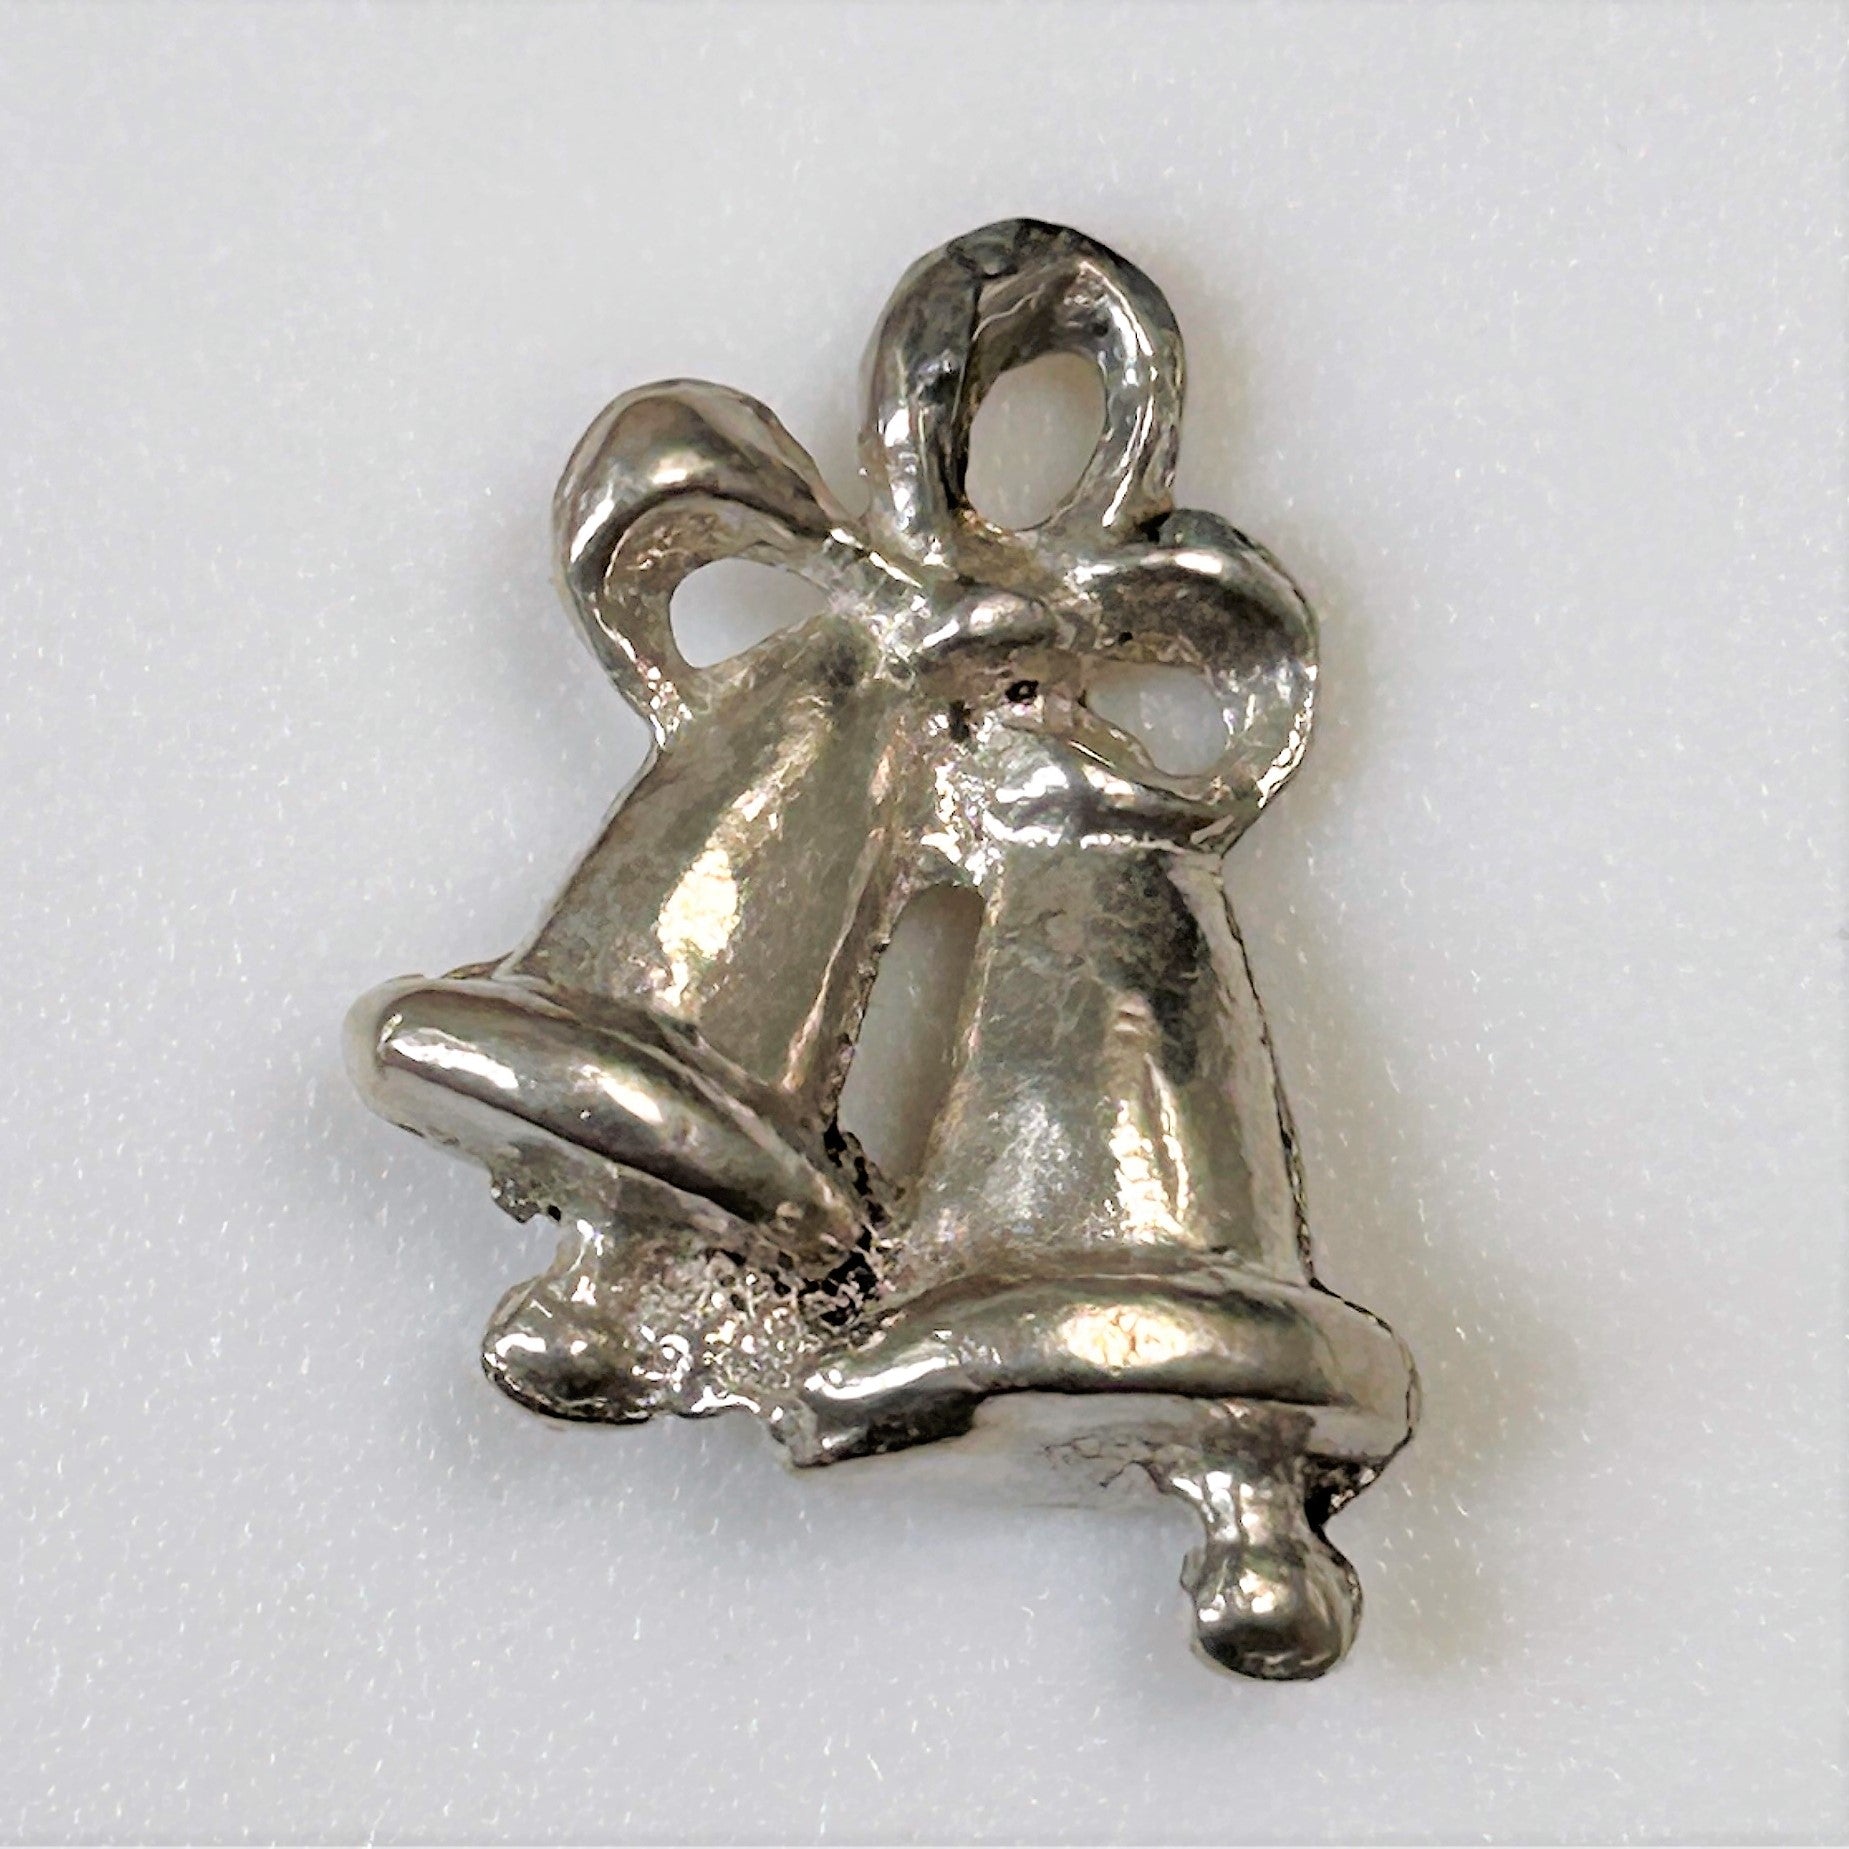 Miniature Silver “Two Bells” Charm Pendant